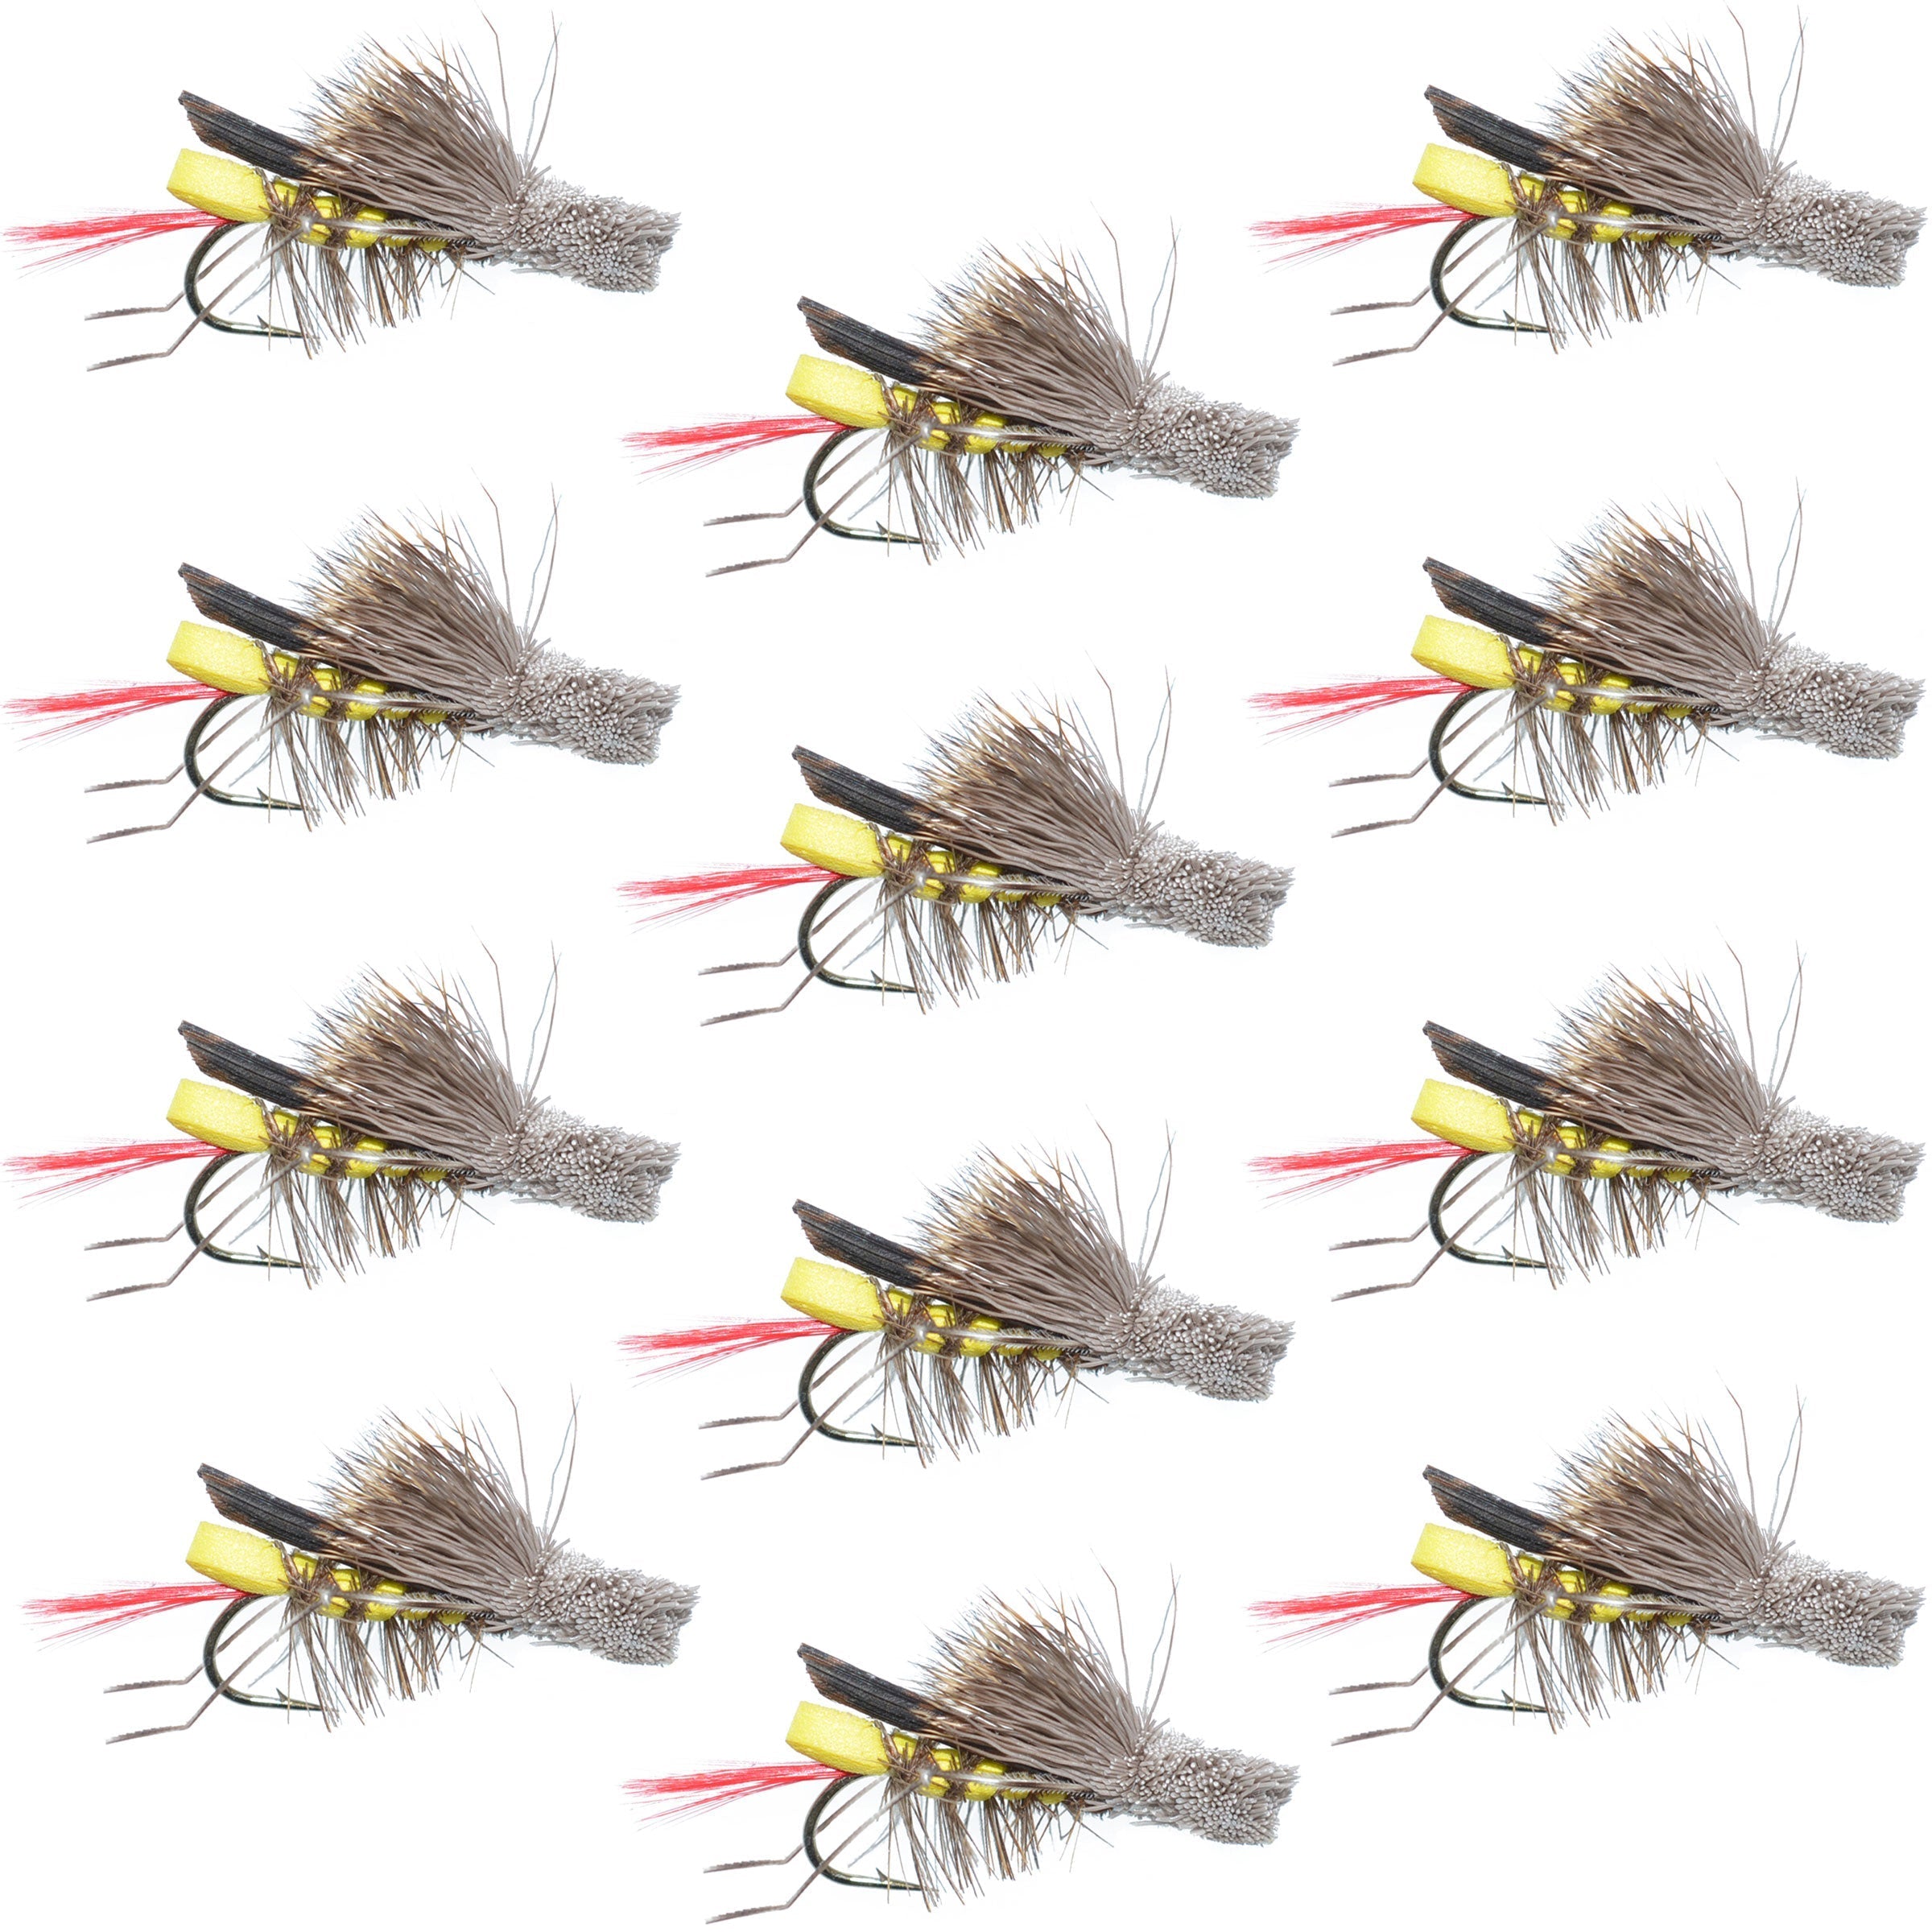 Dave's Hopper Yellow Foam Body Grasshopper Fly - 1 Dozen Flies Hook Size 8